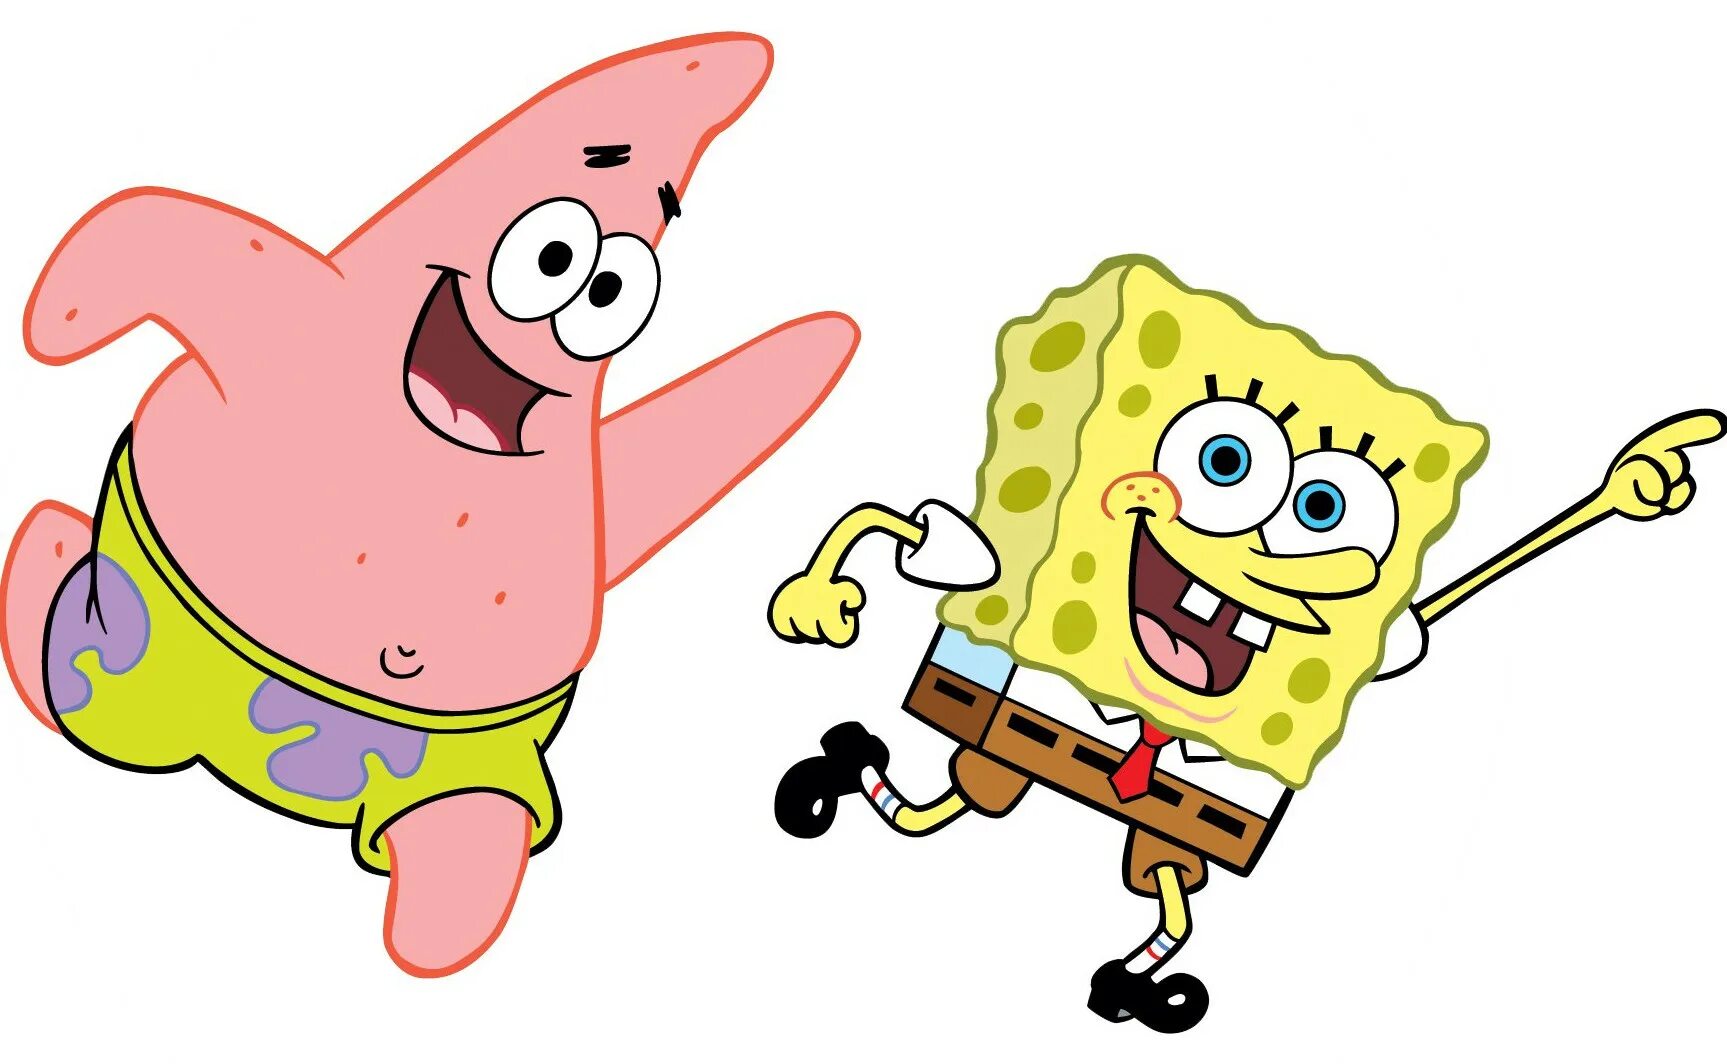 Spongebob patrick. Губка Боб квадратные штаны Патрик. Спанч Боб и Патрик на белом фоне. Спанч Боб Патрик и Сквидвард. Спанч Боб Square Pants.